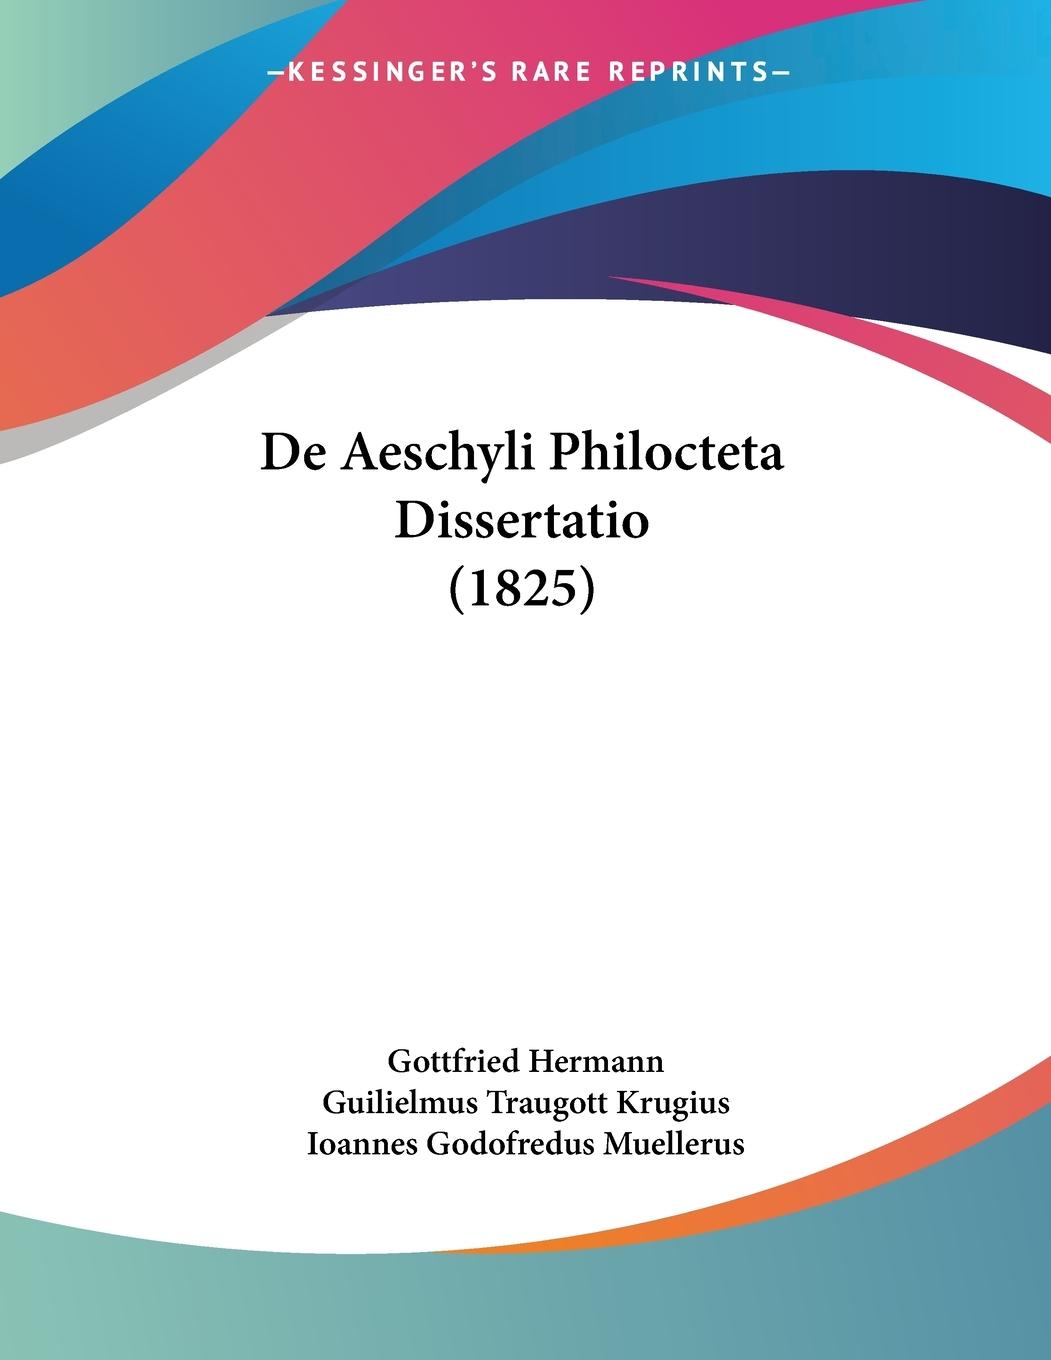 De Aeschyli Philocteta Dissertatio (1825) - Hermann, Gottfried Krugius, Guilielmus Traugott Muellerus, Ioannes Godofredus